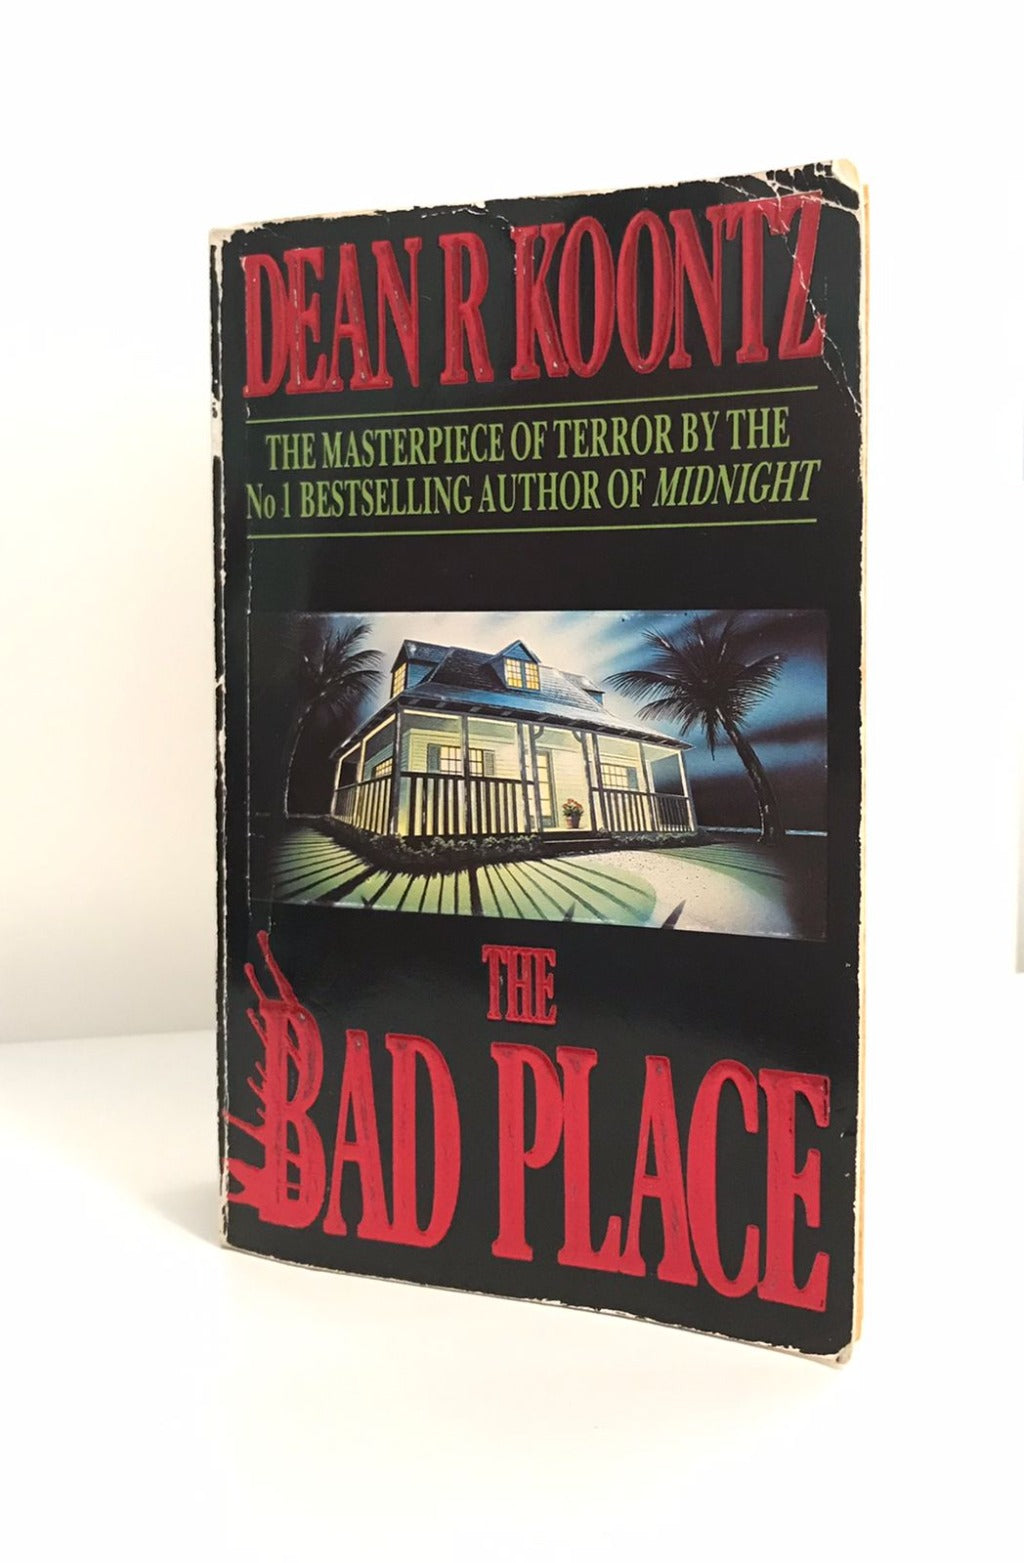 The bad place - Dean Koontz